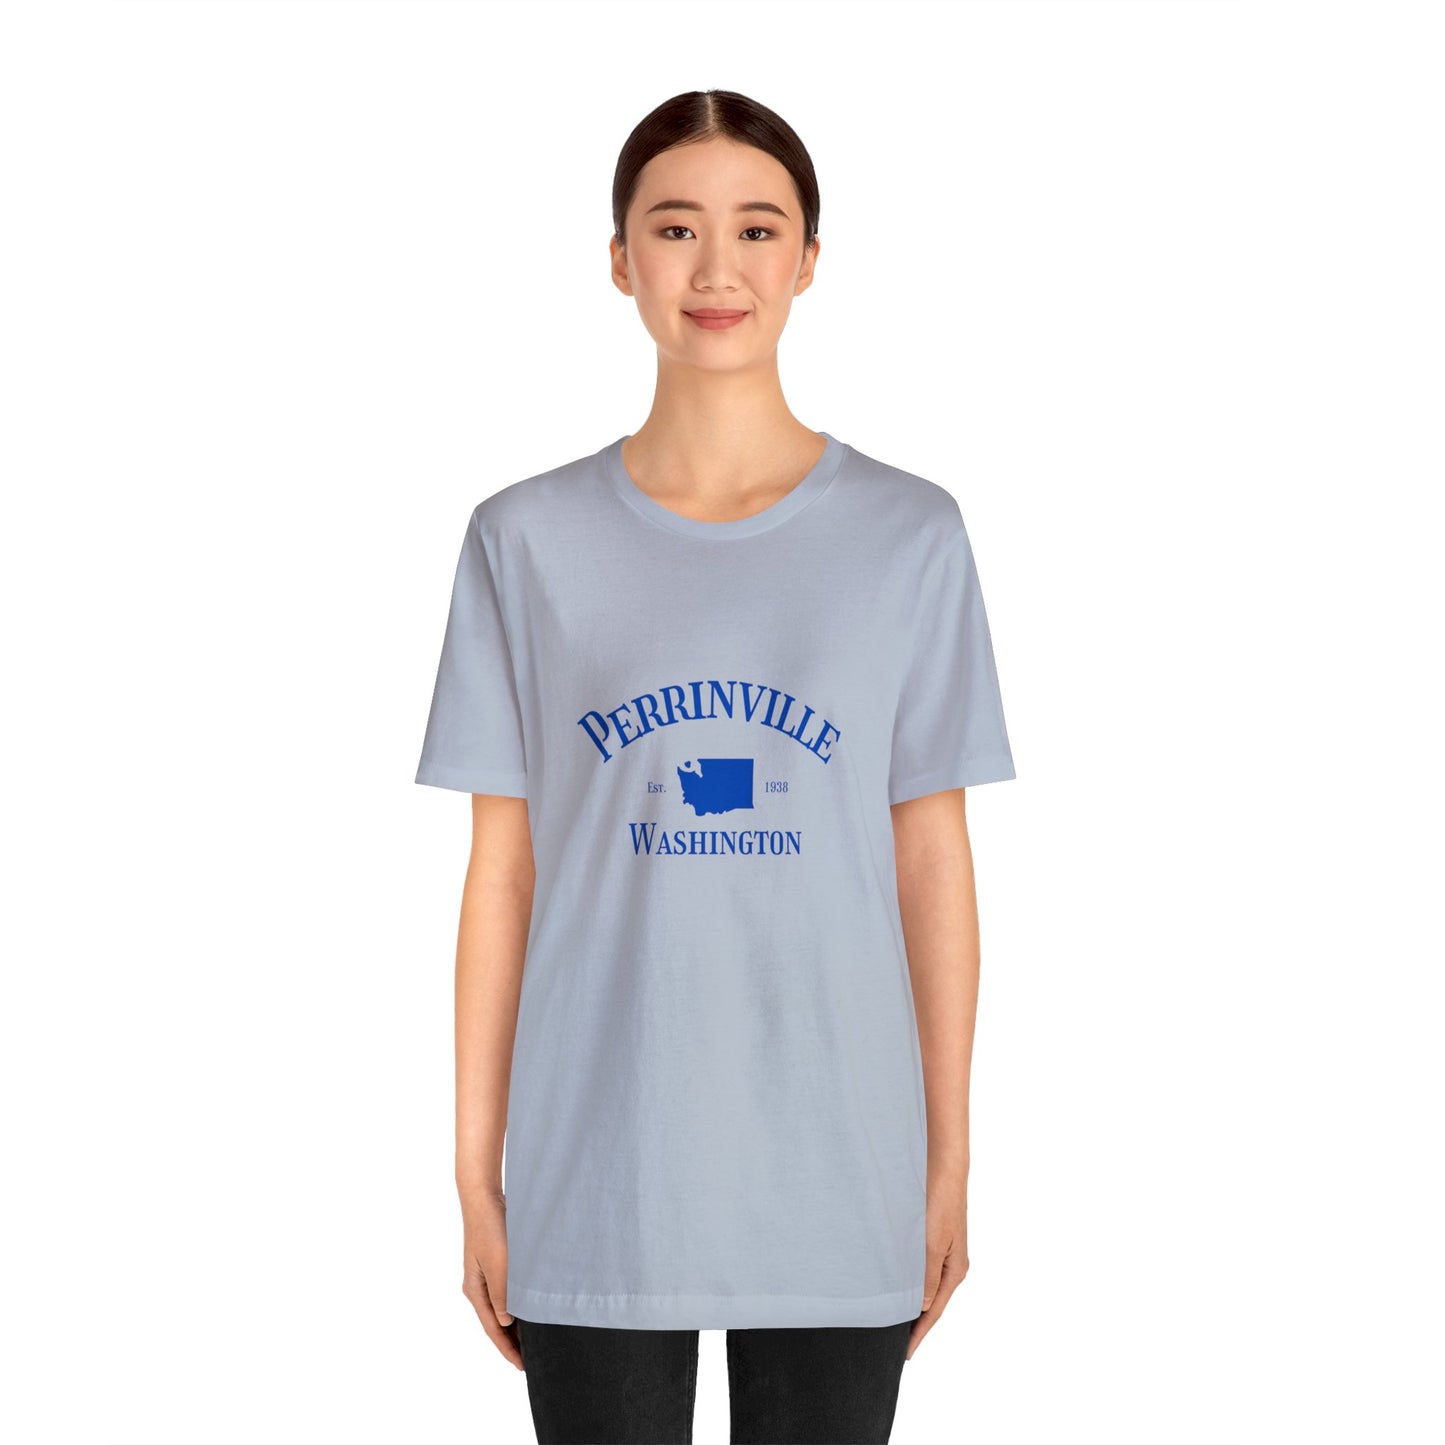 Perrinville Est. 1938 T-shirt